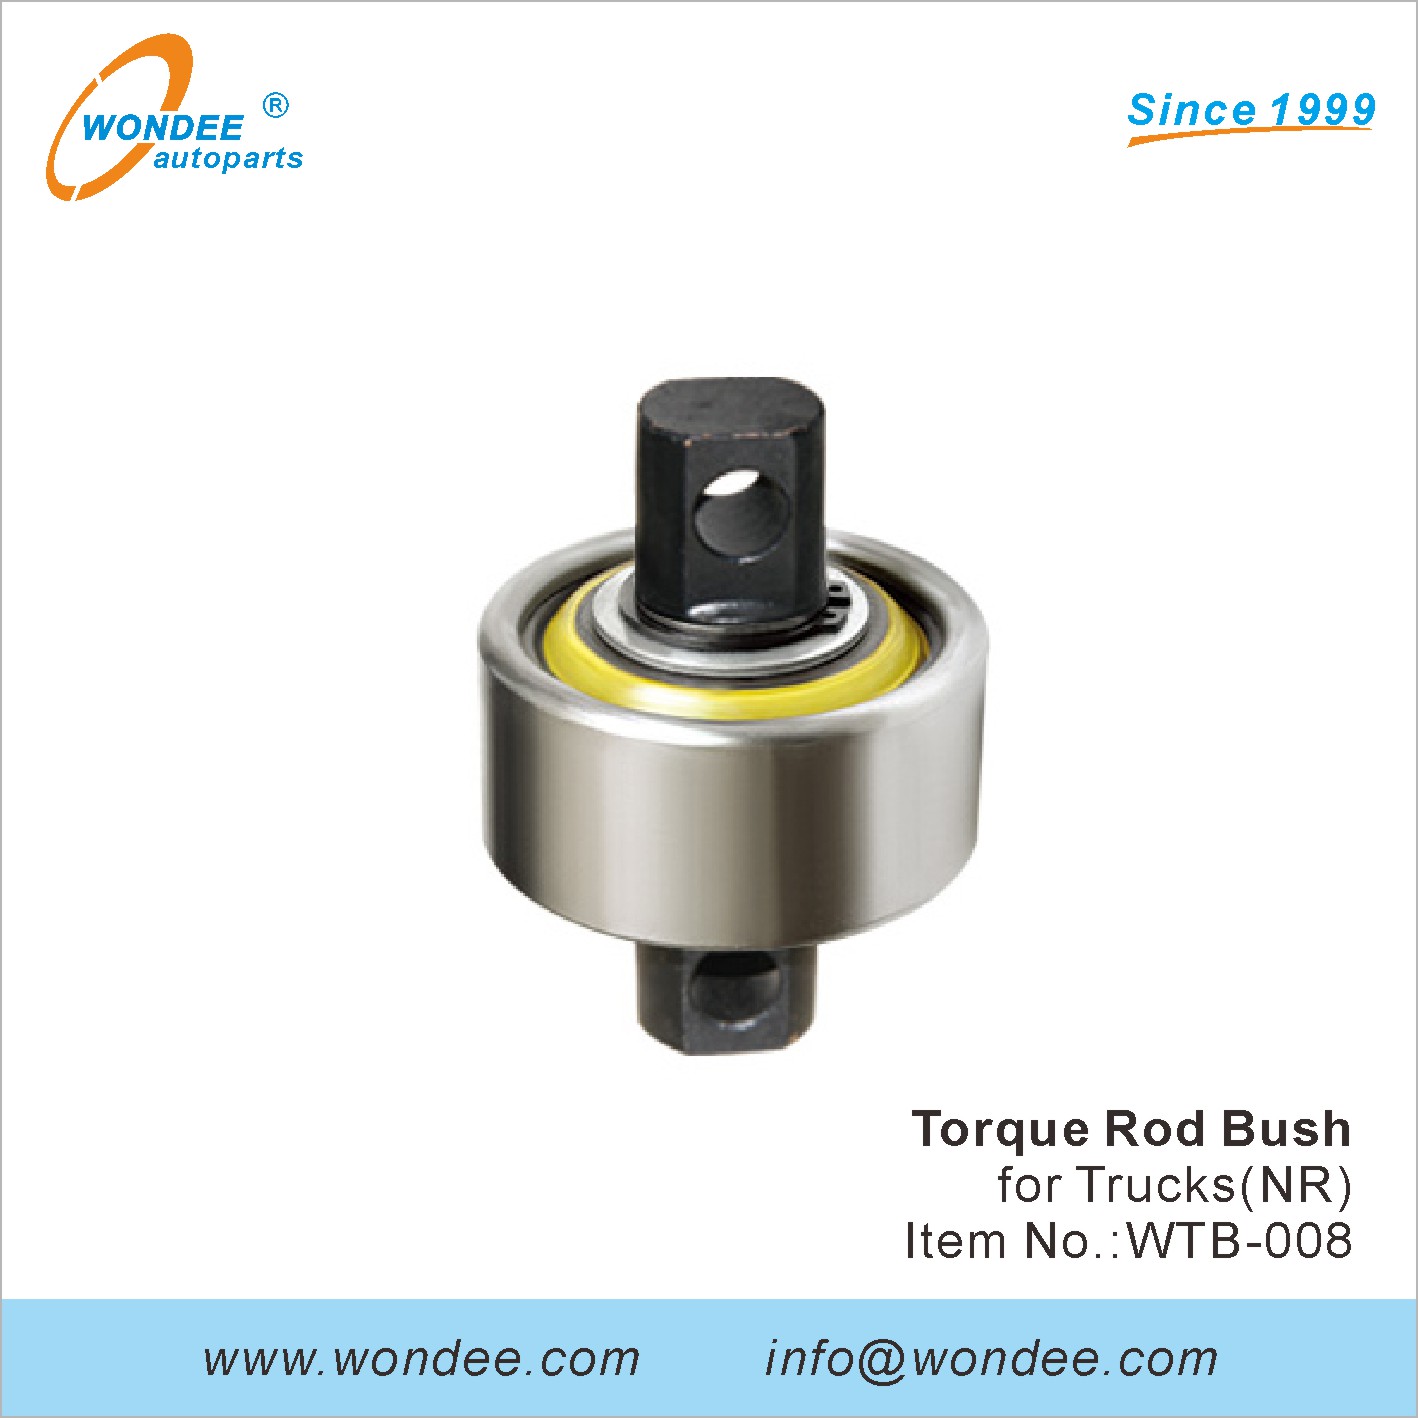 WONDEE torque rod bush (8)